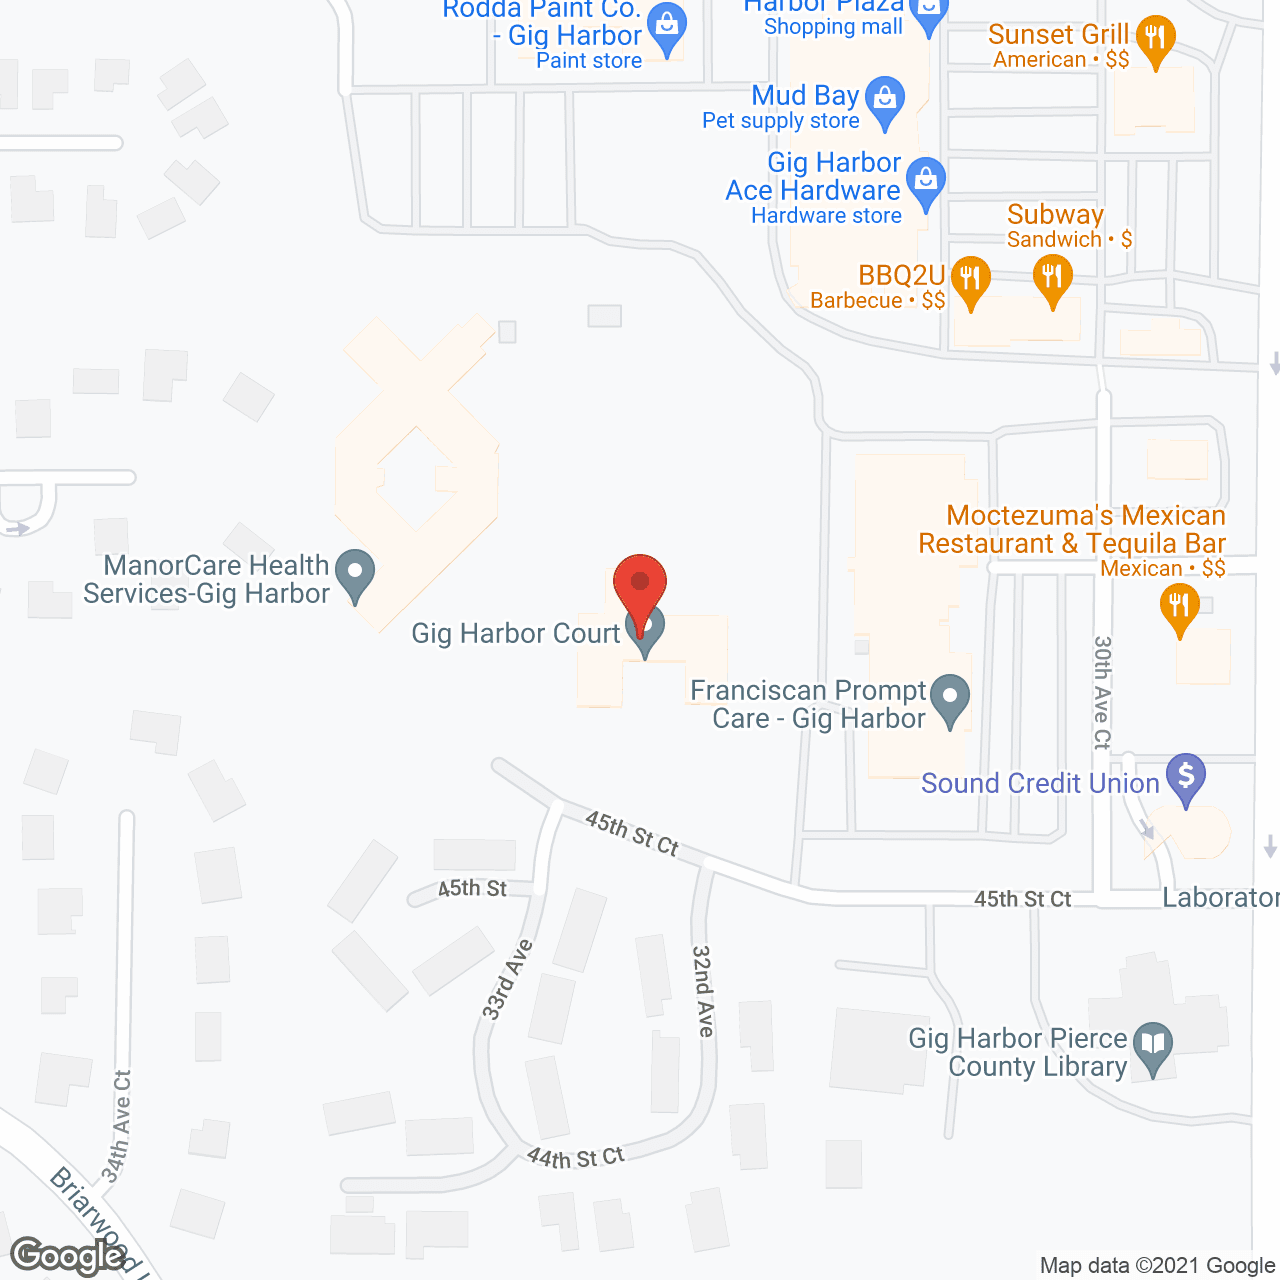 Gig Harbor Court in google map